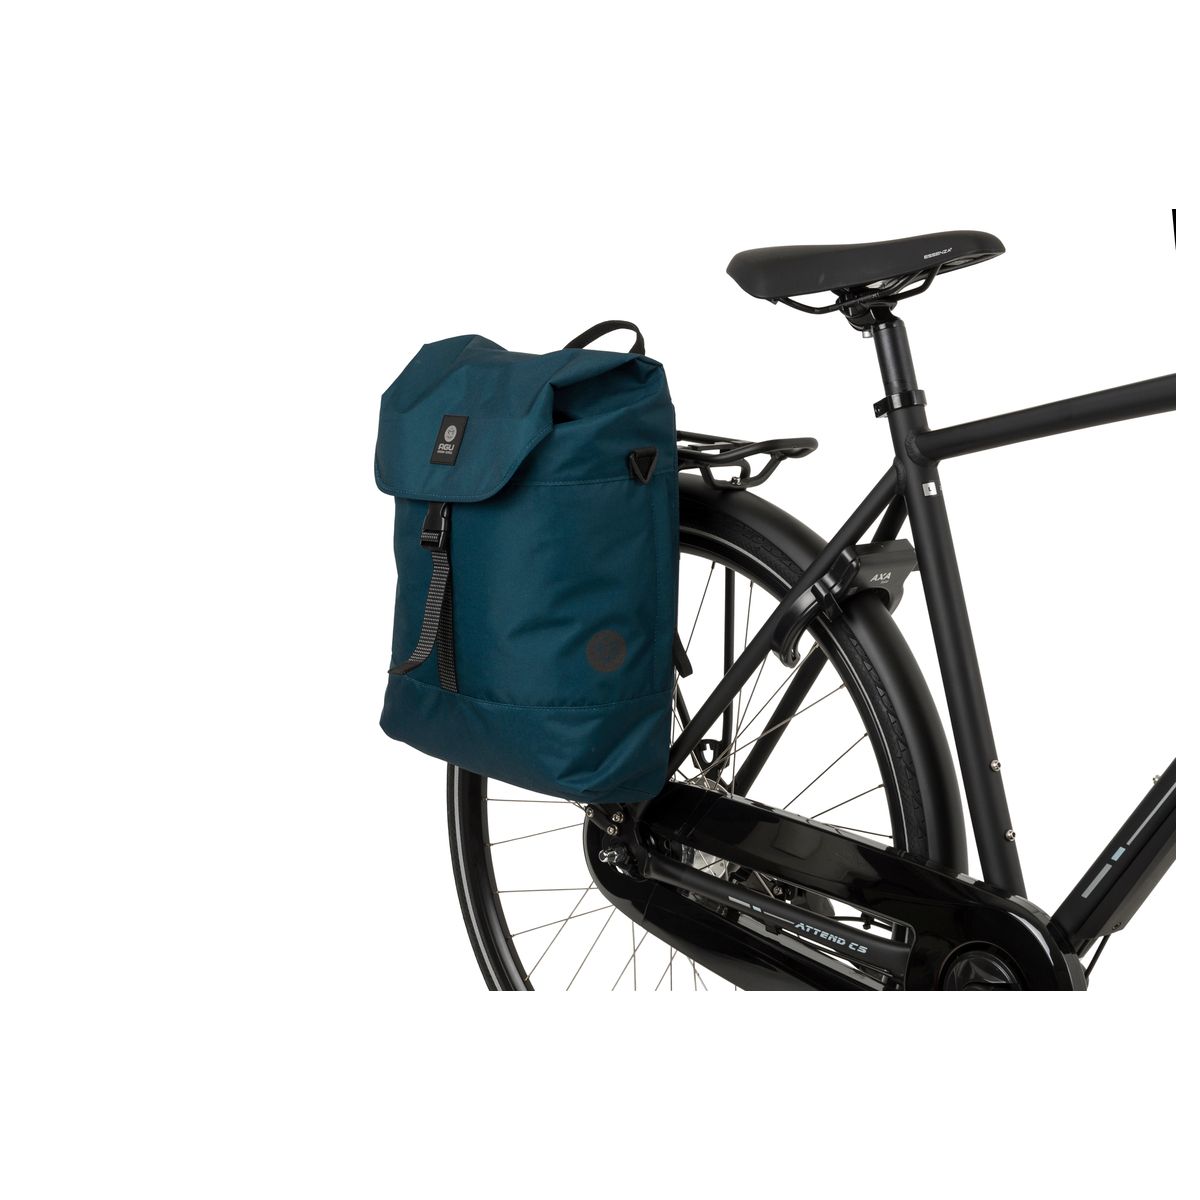 DWR Single Bike Bag Urban fit example